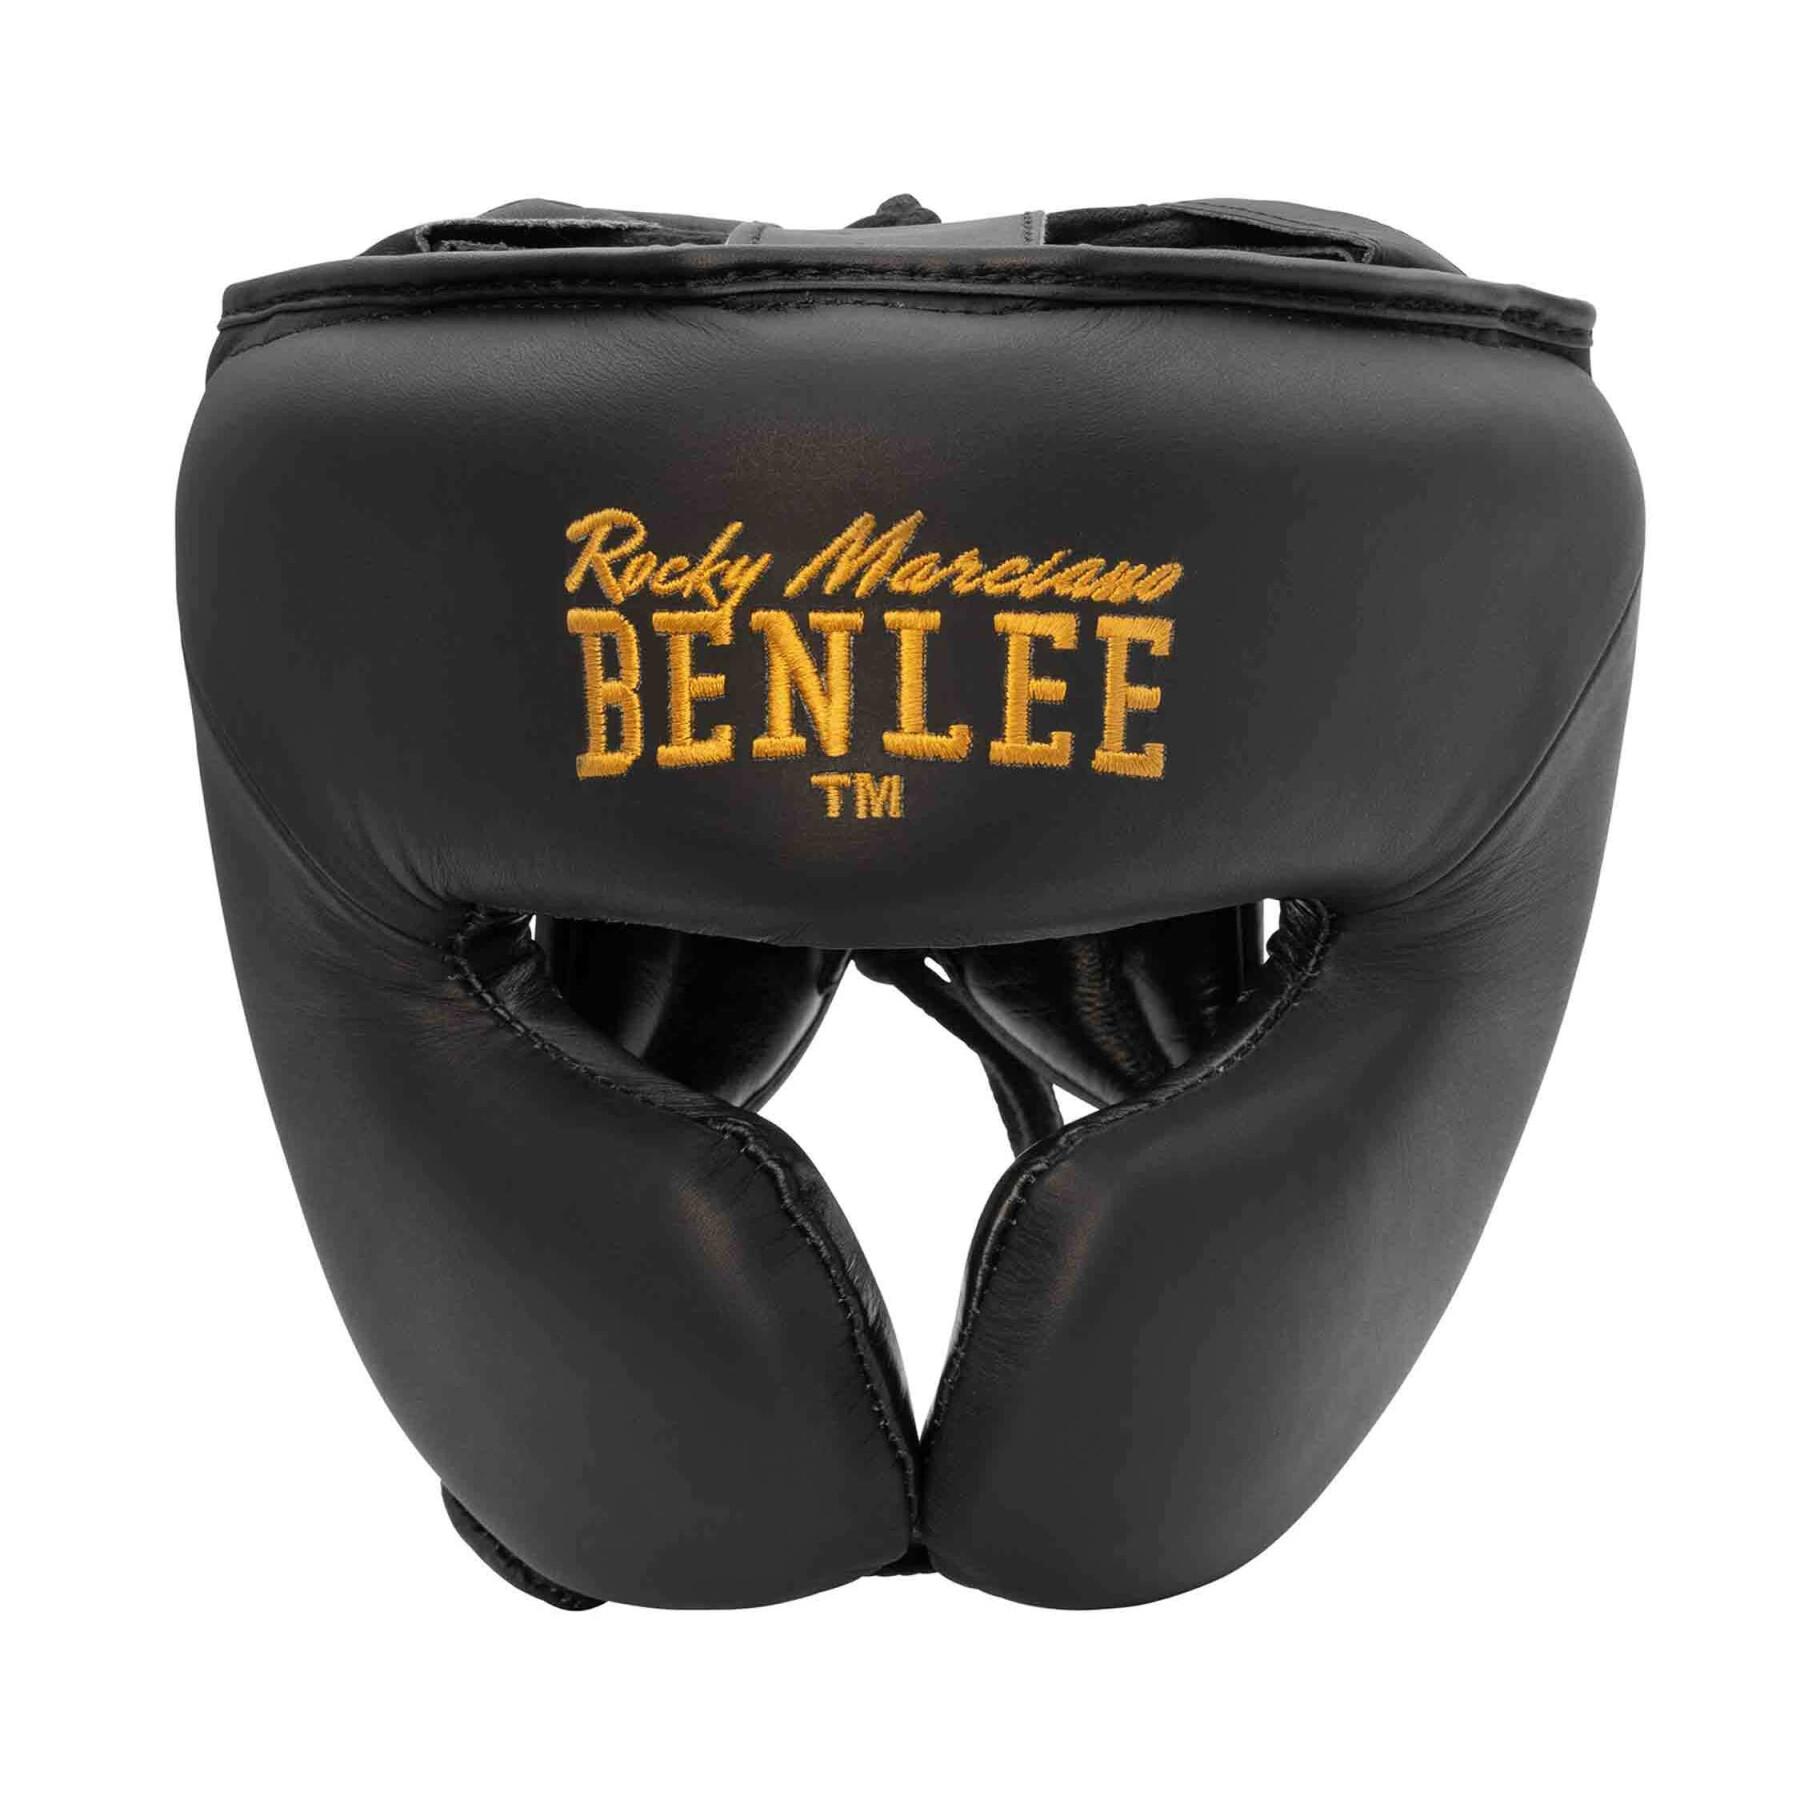 Casque de boxe Benlee Berkley